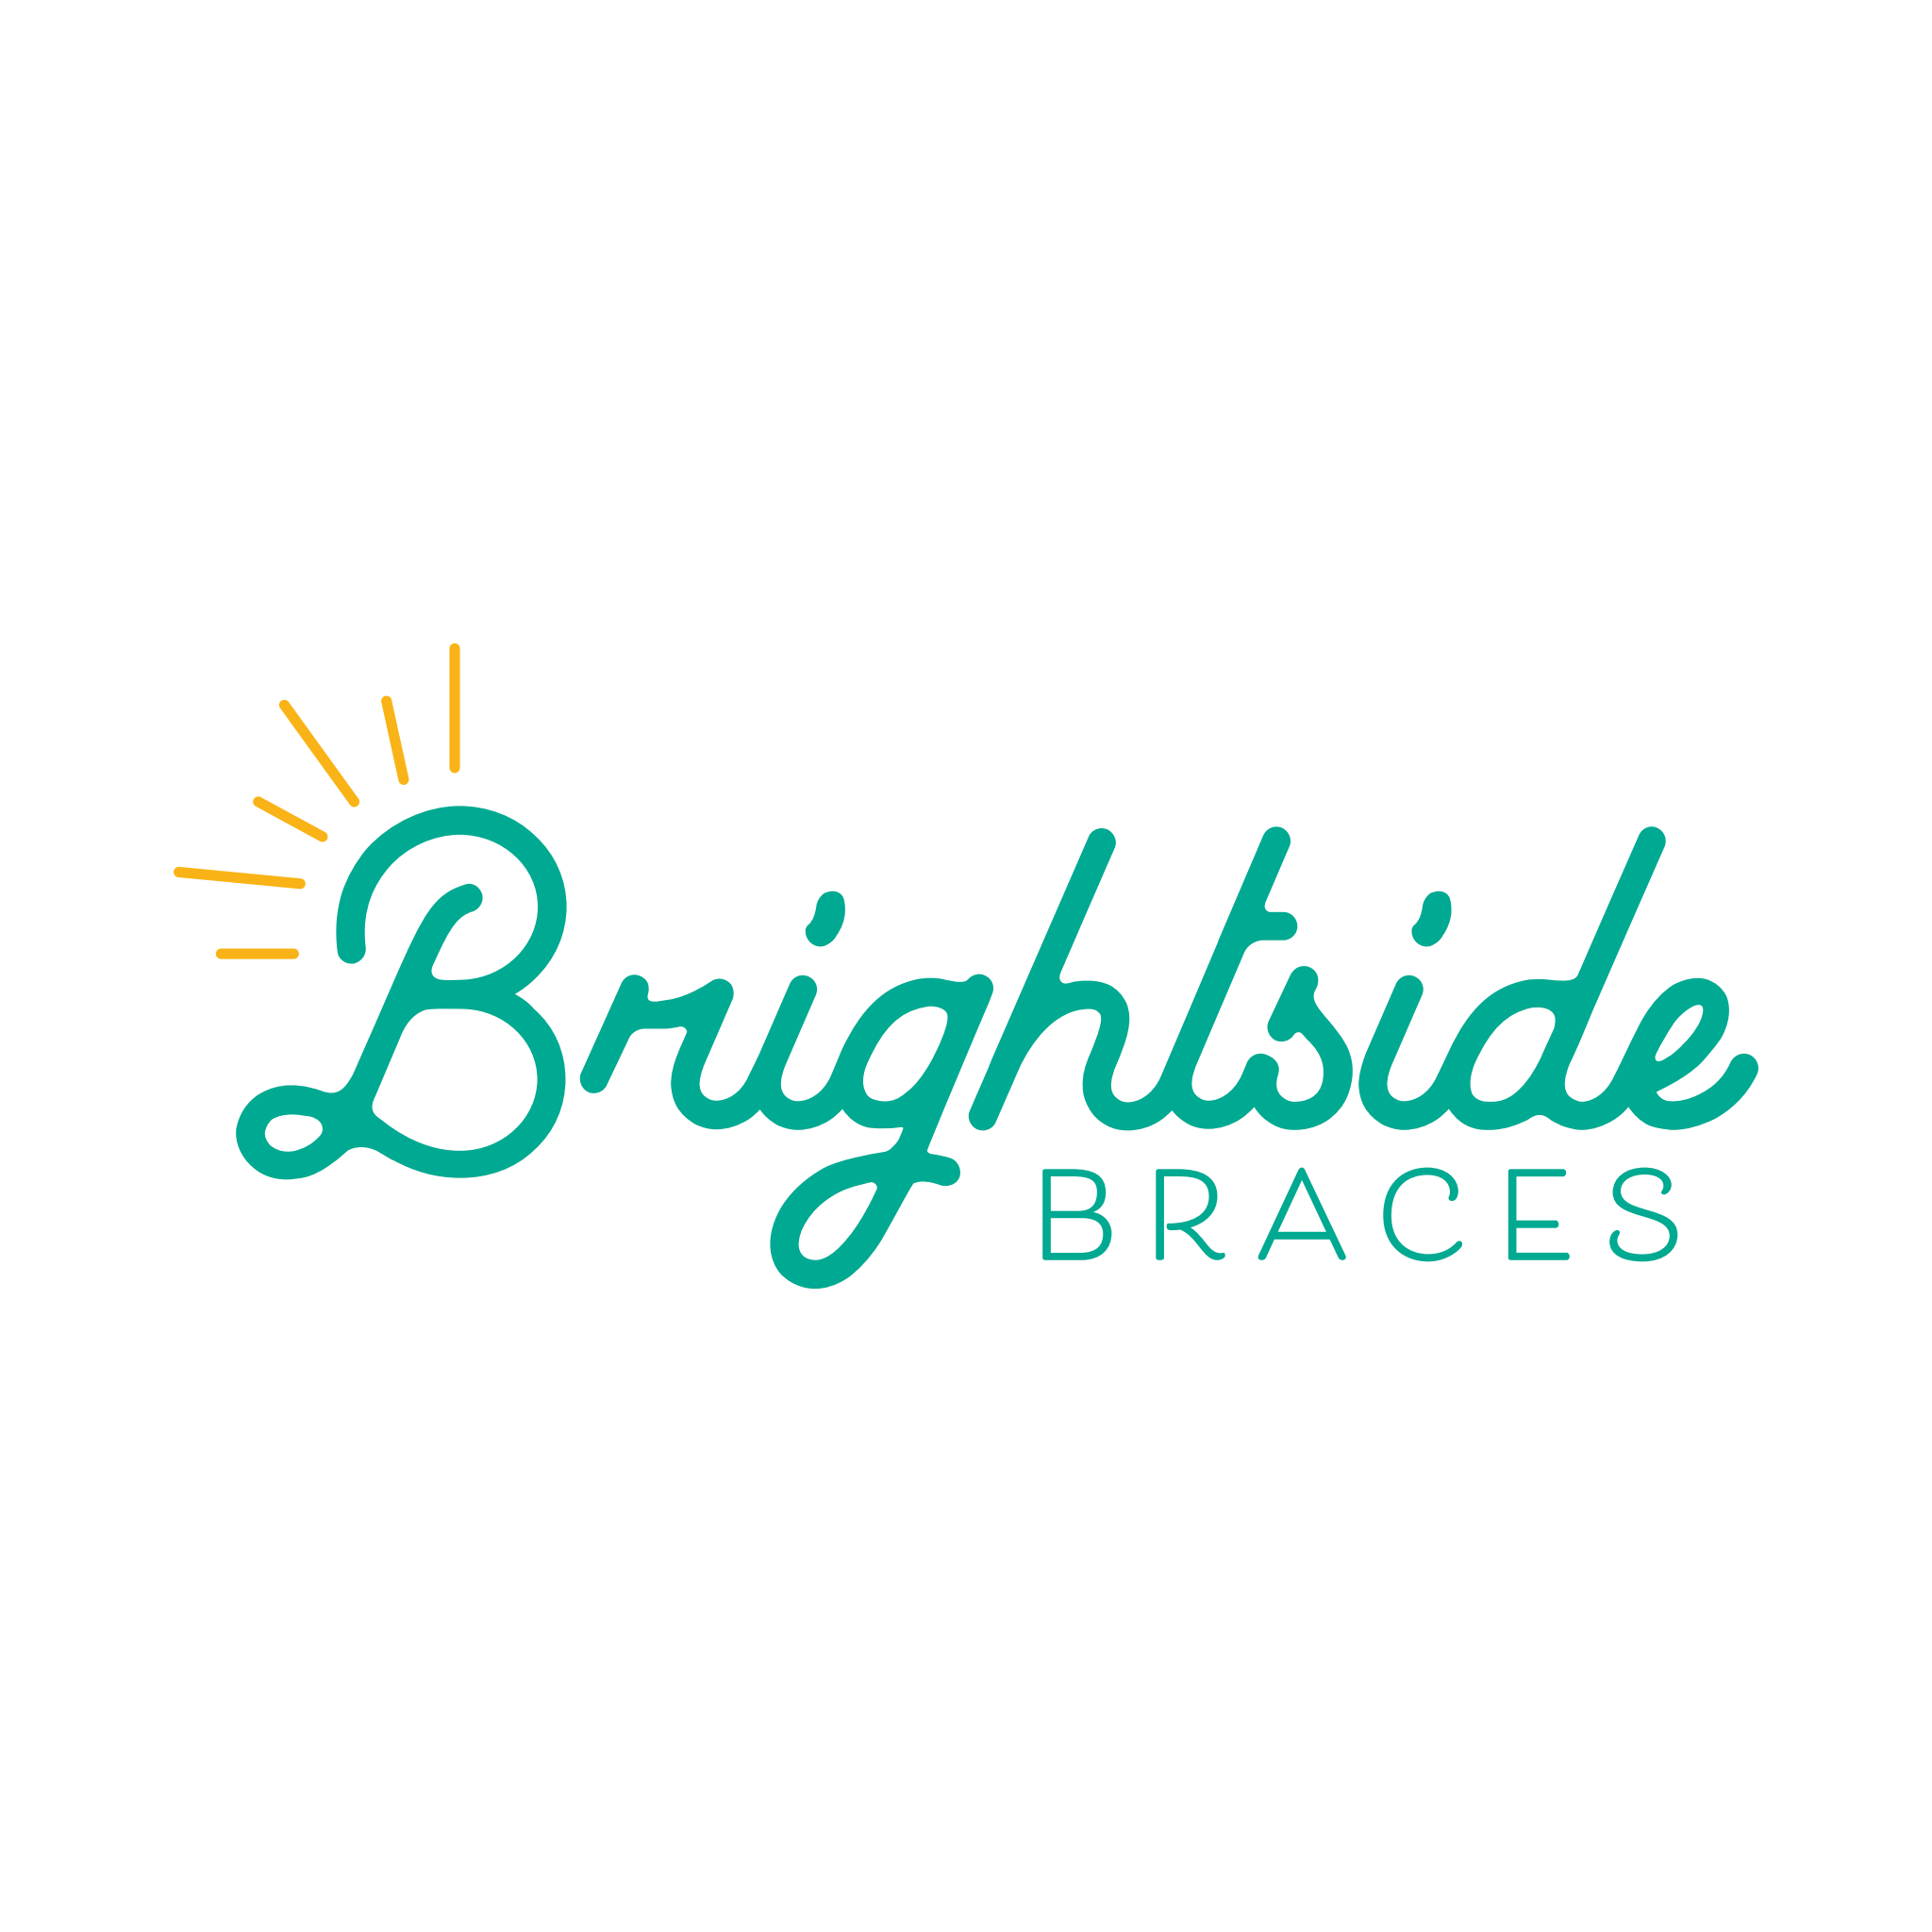 Brightside Braces